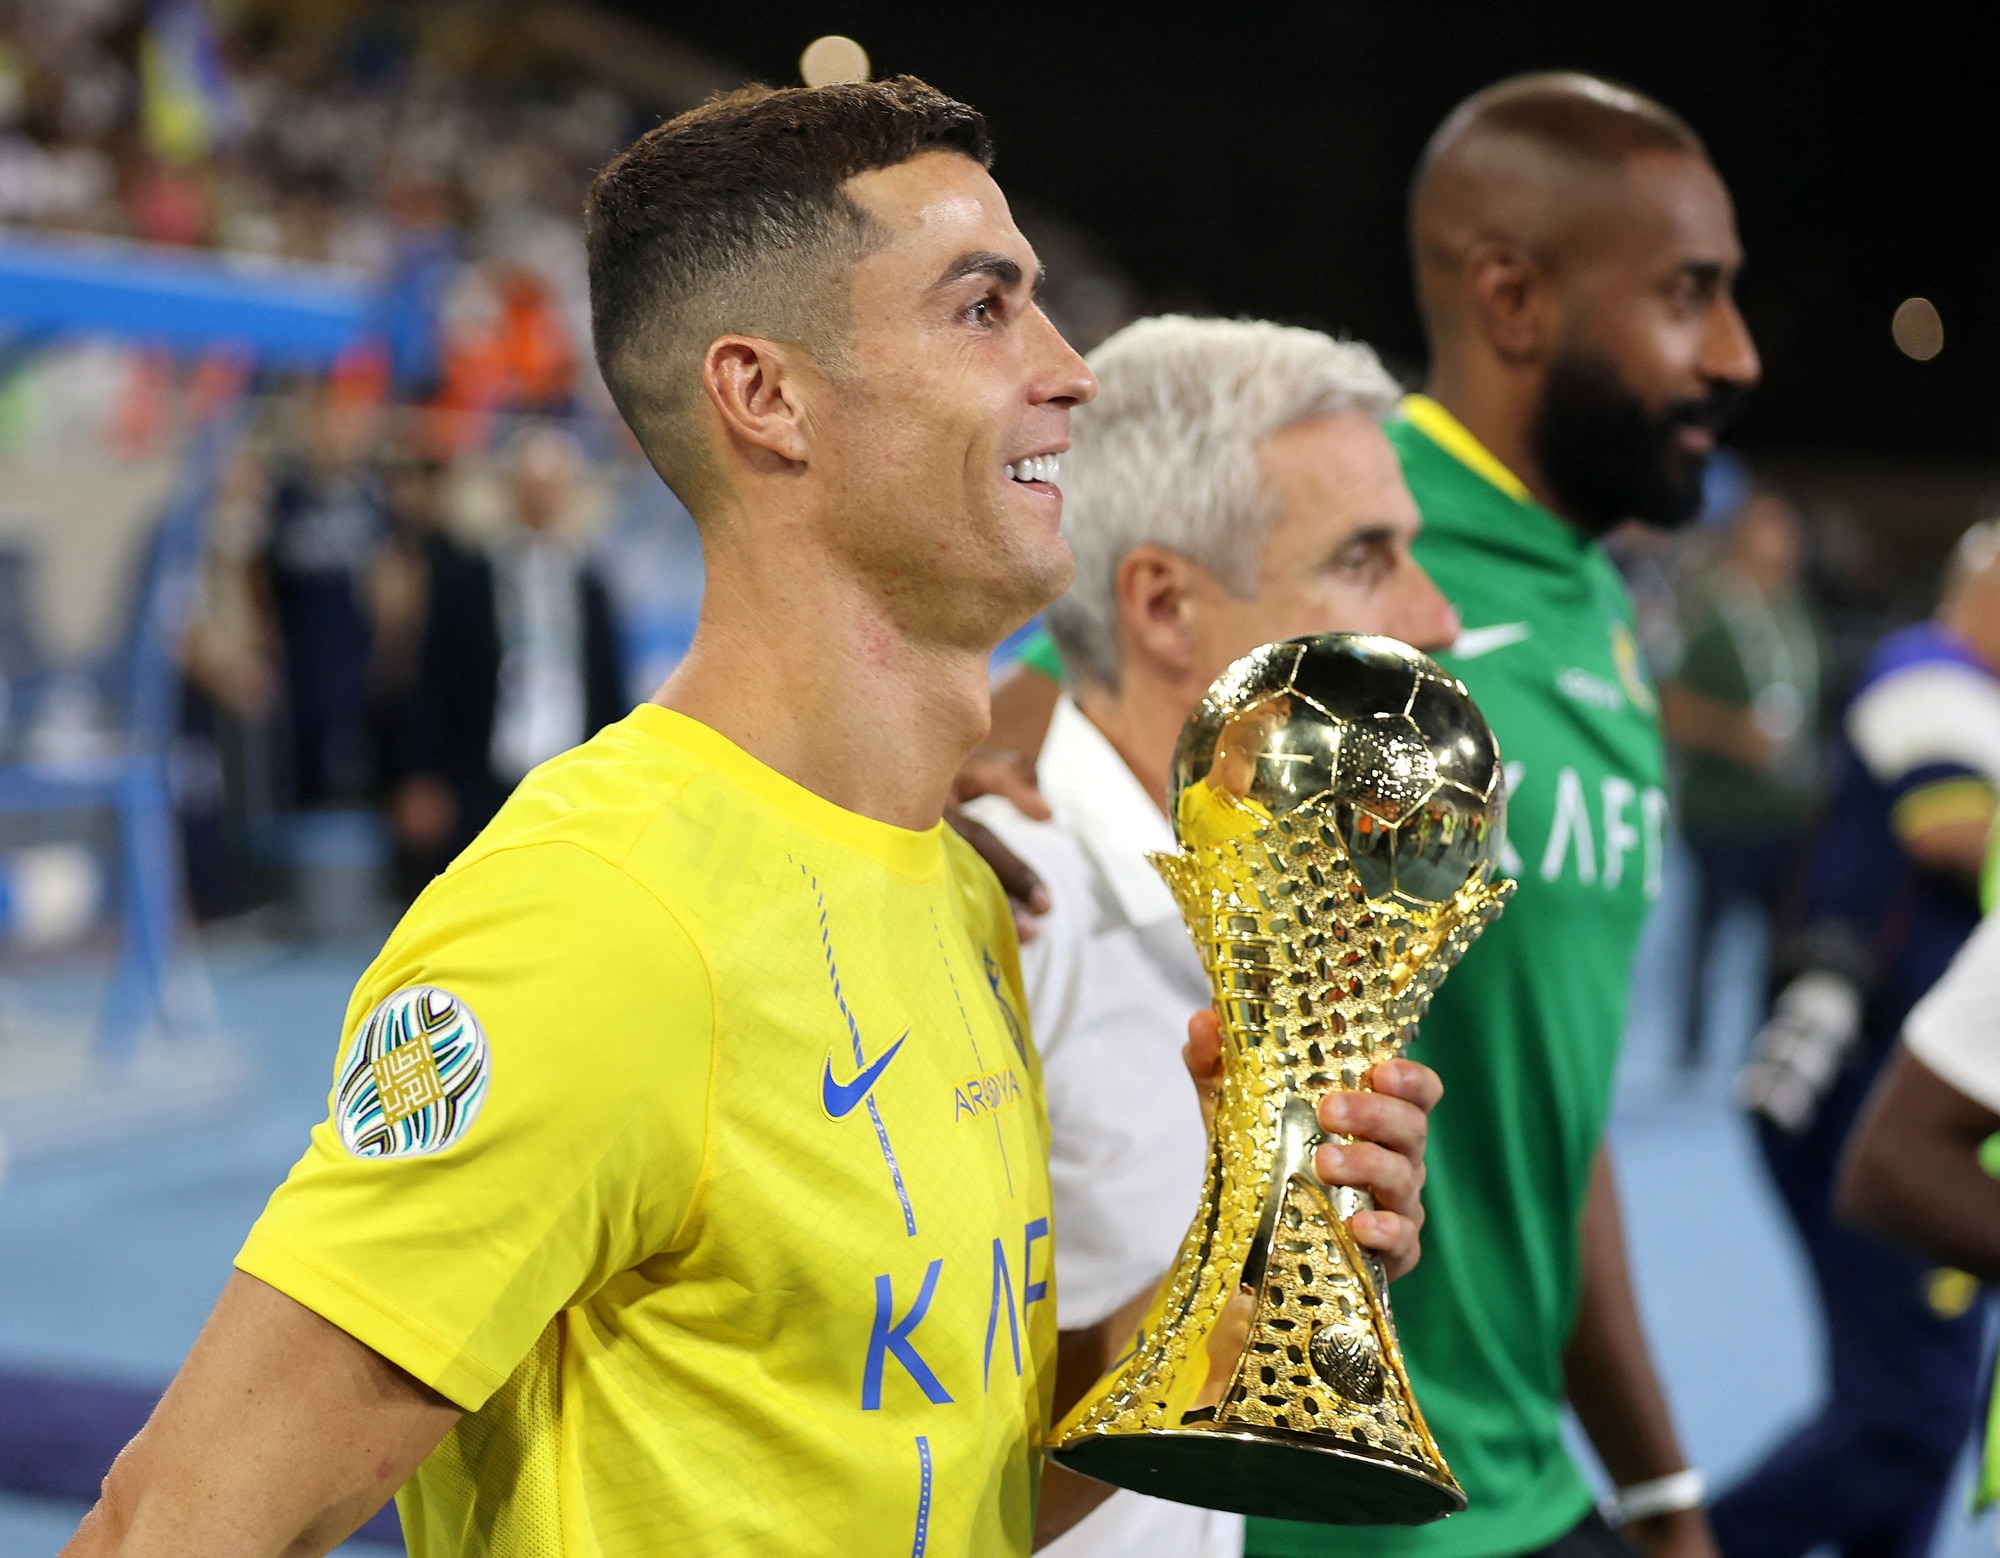 AFC Champions League: Ronaldo, Mane, Neymar, Benzema, et al bring